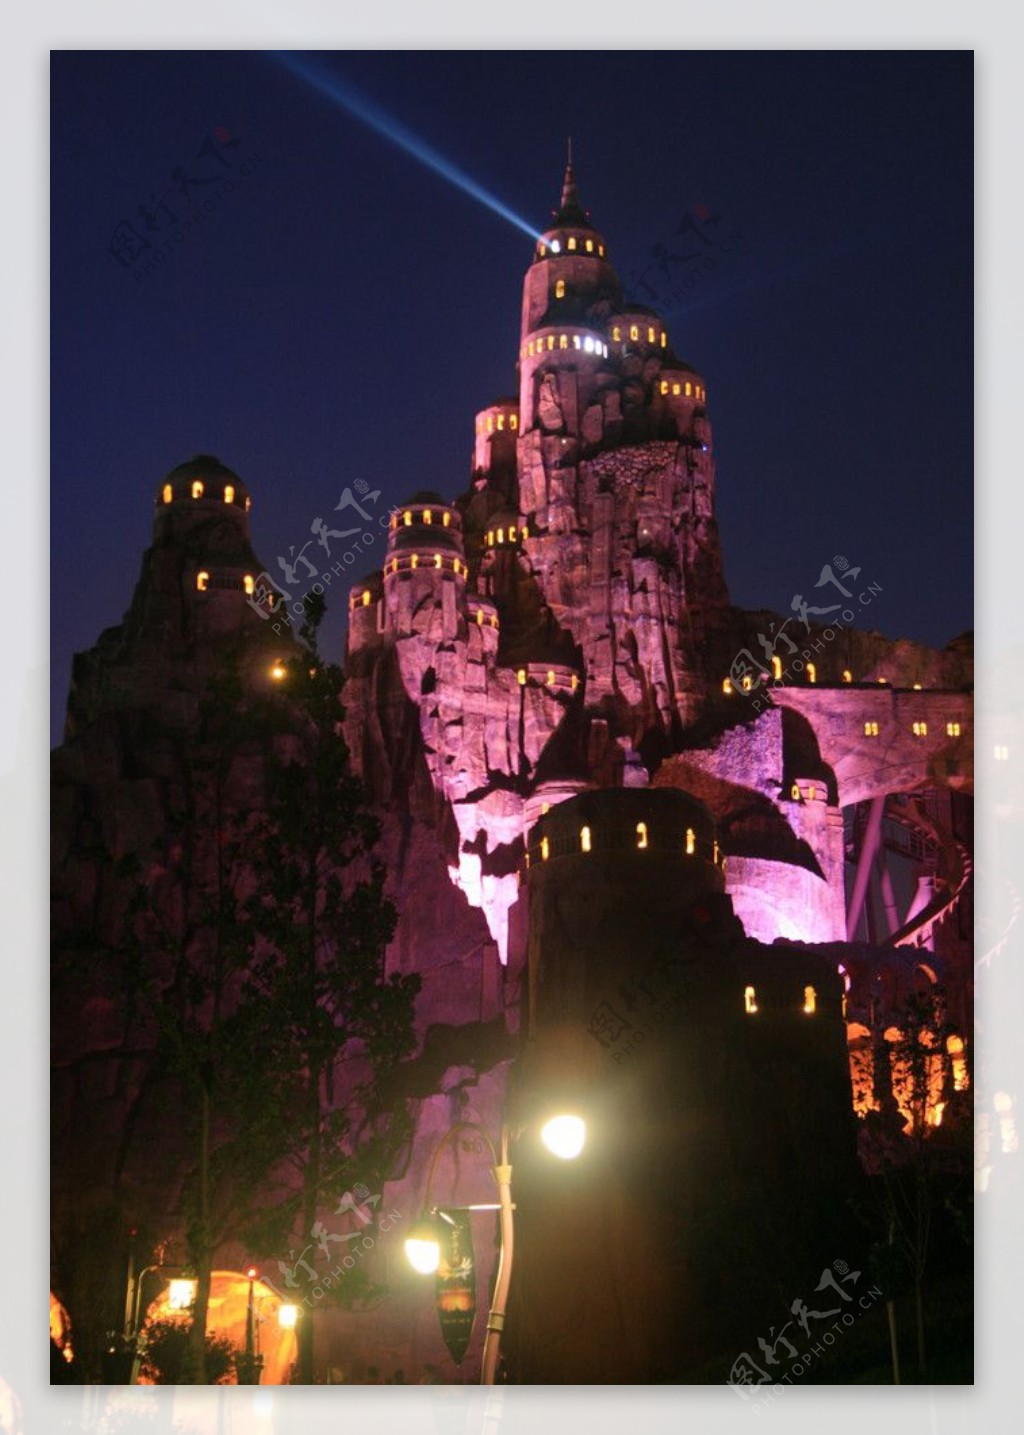 夜晚城堡图片